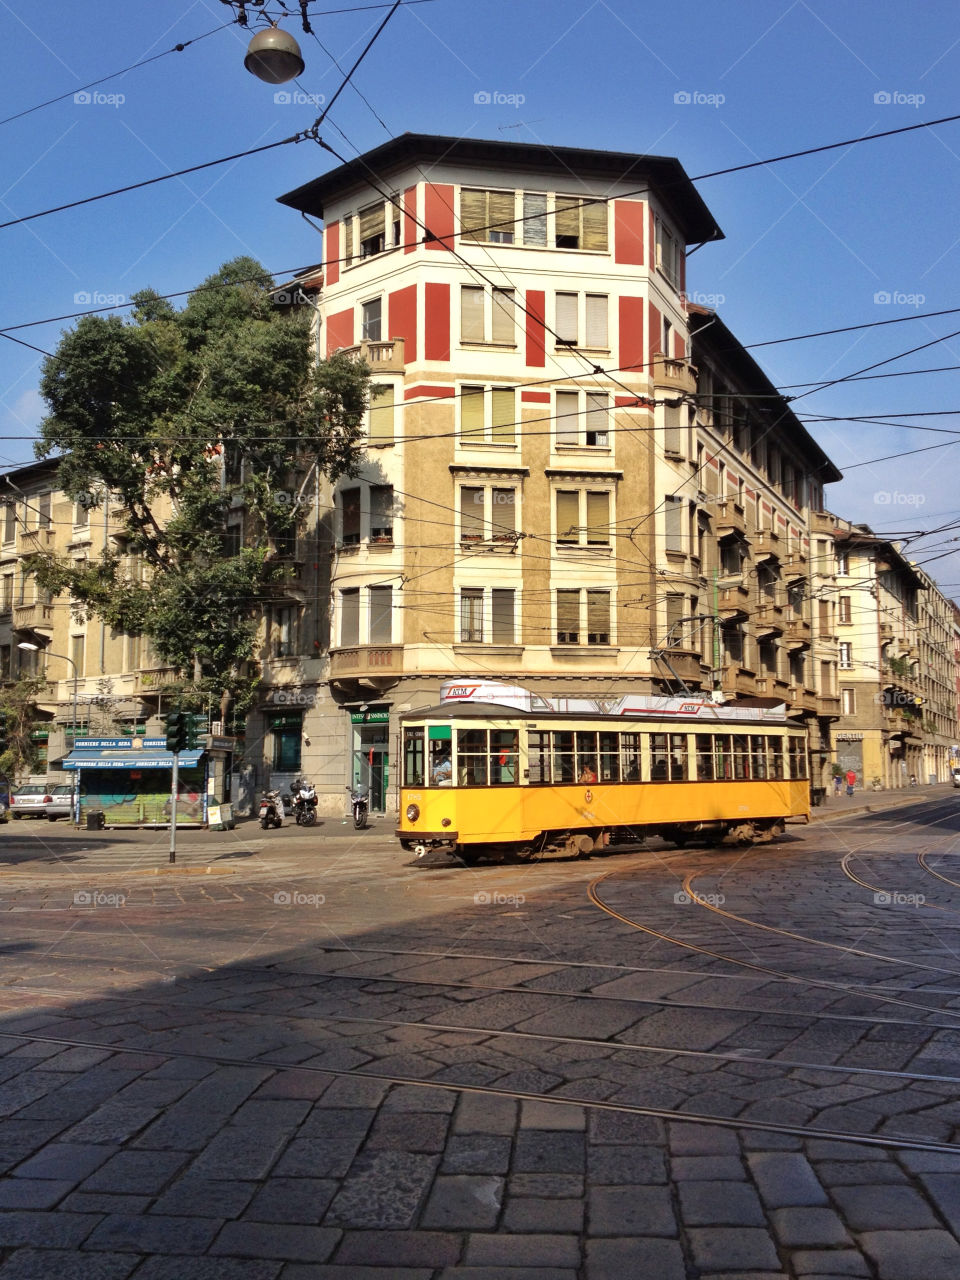 italy milano train tram by adrianocastelli